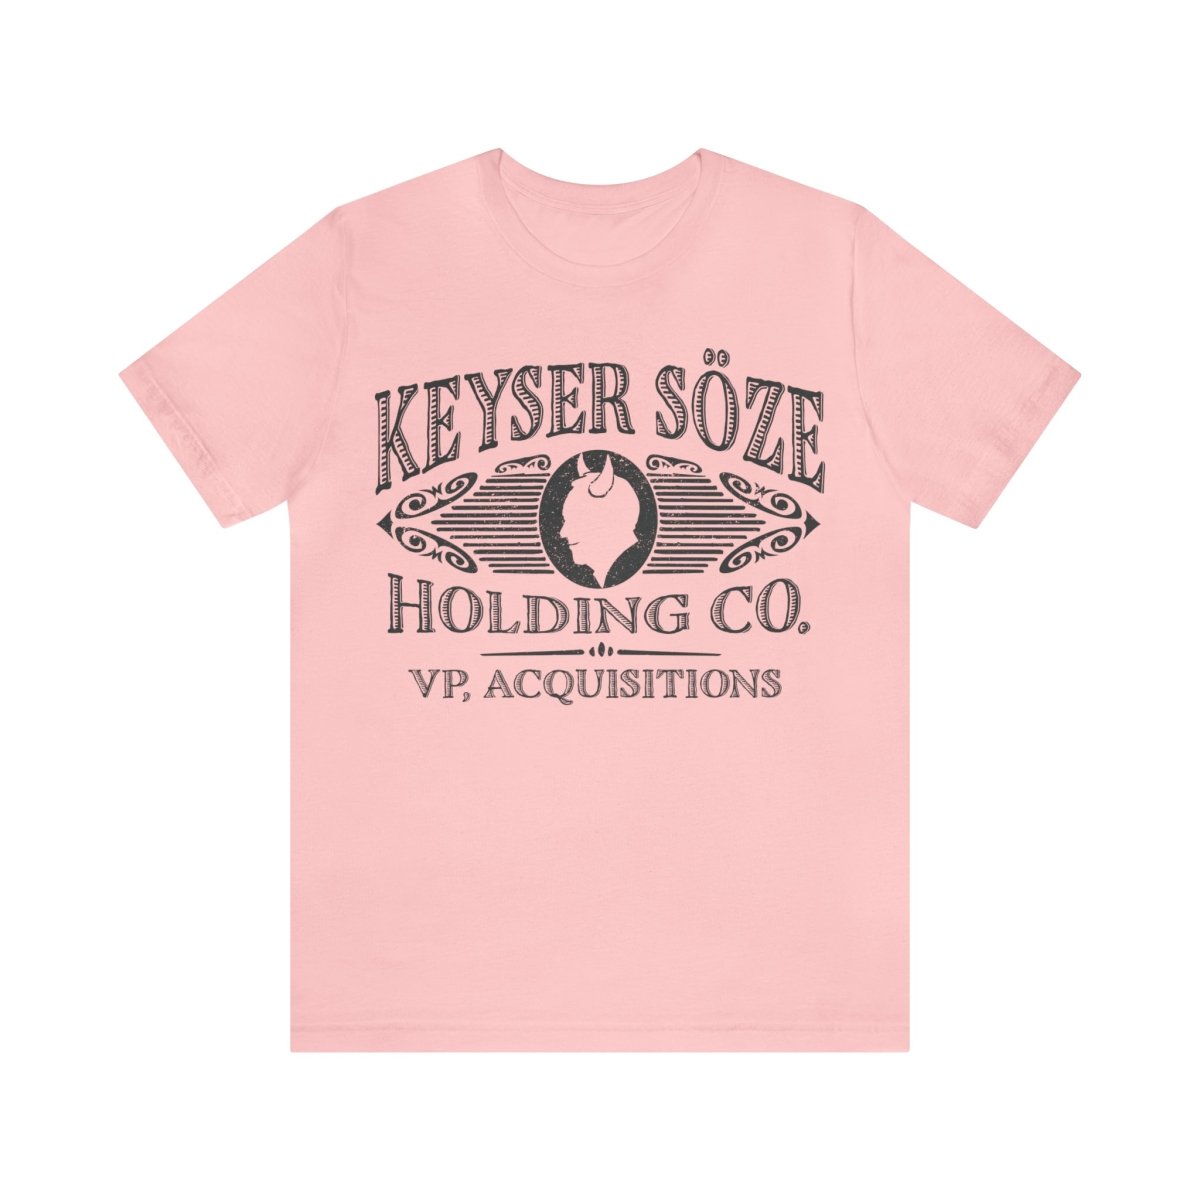 Keyser Soze Premium T-Shirt, VP Acquisitions, Tricky Devil, Criminal Mastermind, Villain, Corporate Gift